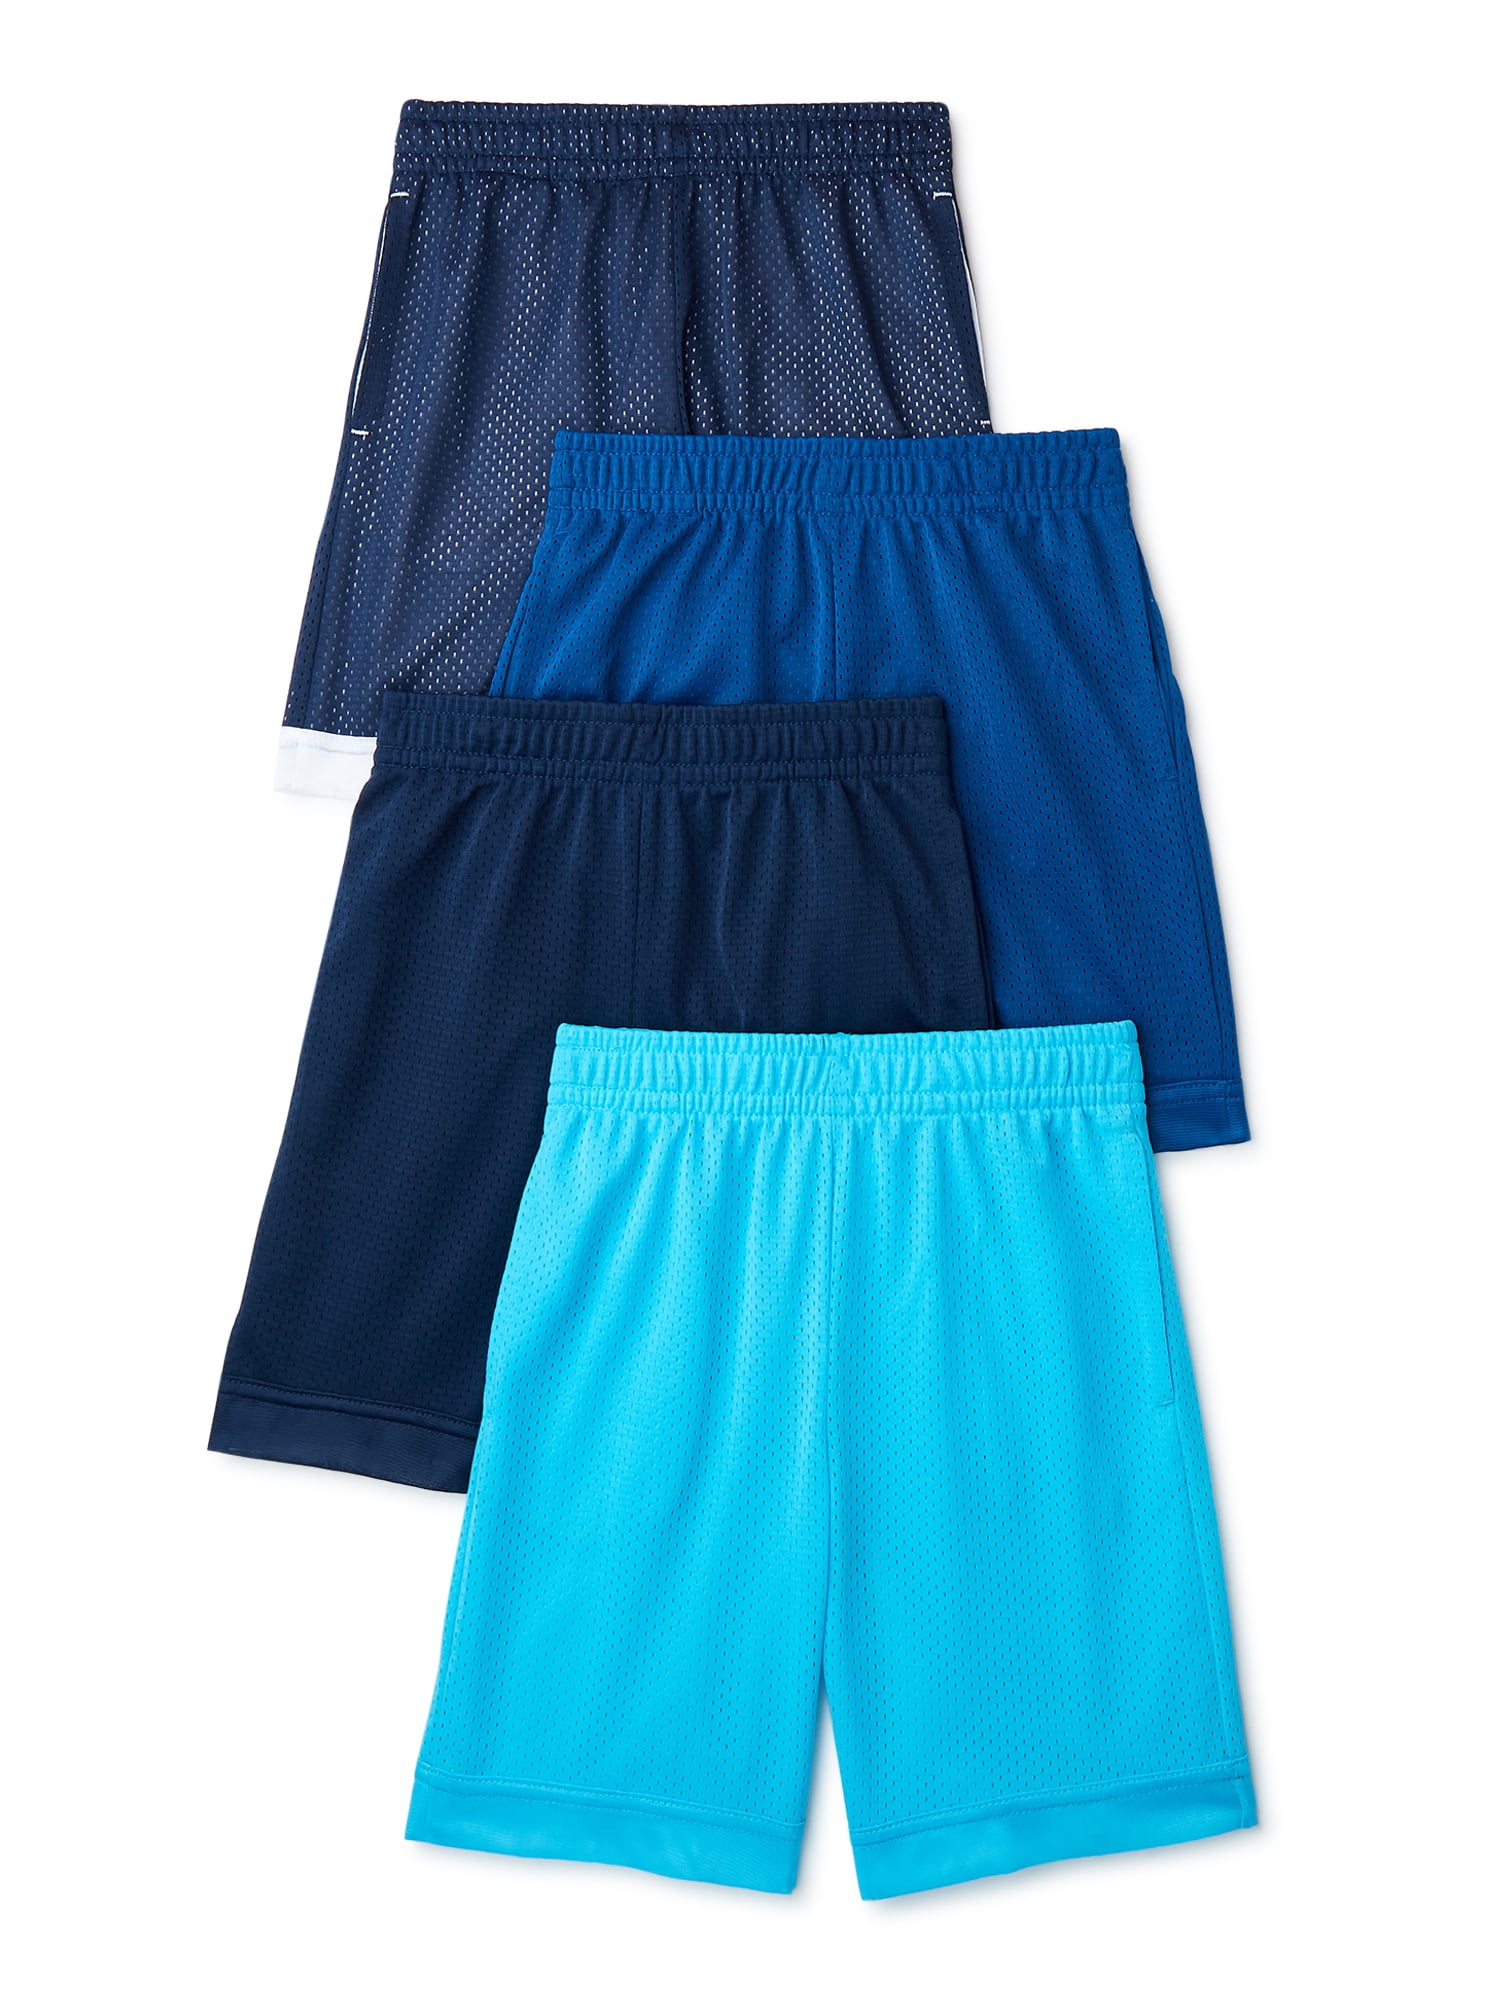 Athletic Works Boys Mesh Shorts, 4-Pack, Sizes 4-18 & Husky - Walmart.com